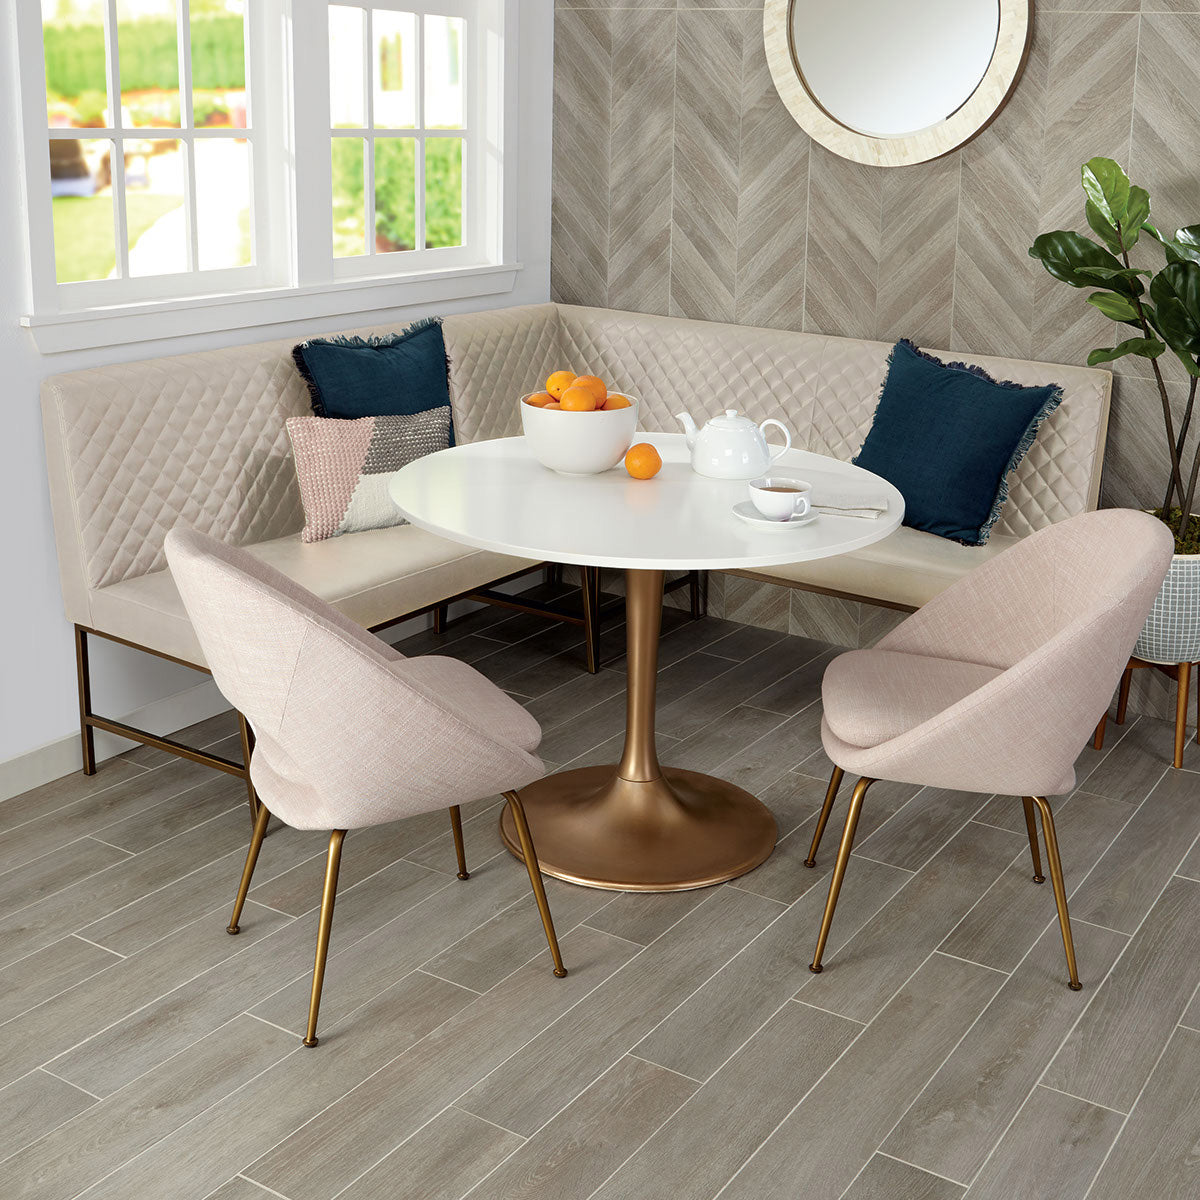 Daltile Trellis Oak 6 in. x 36 in. Porcelain Floor Tile